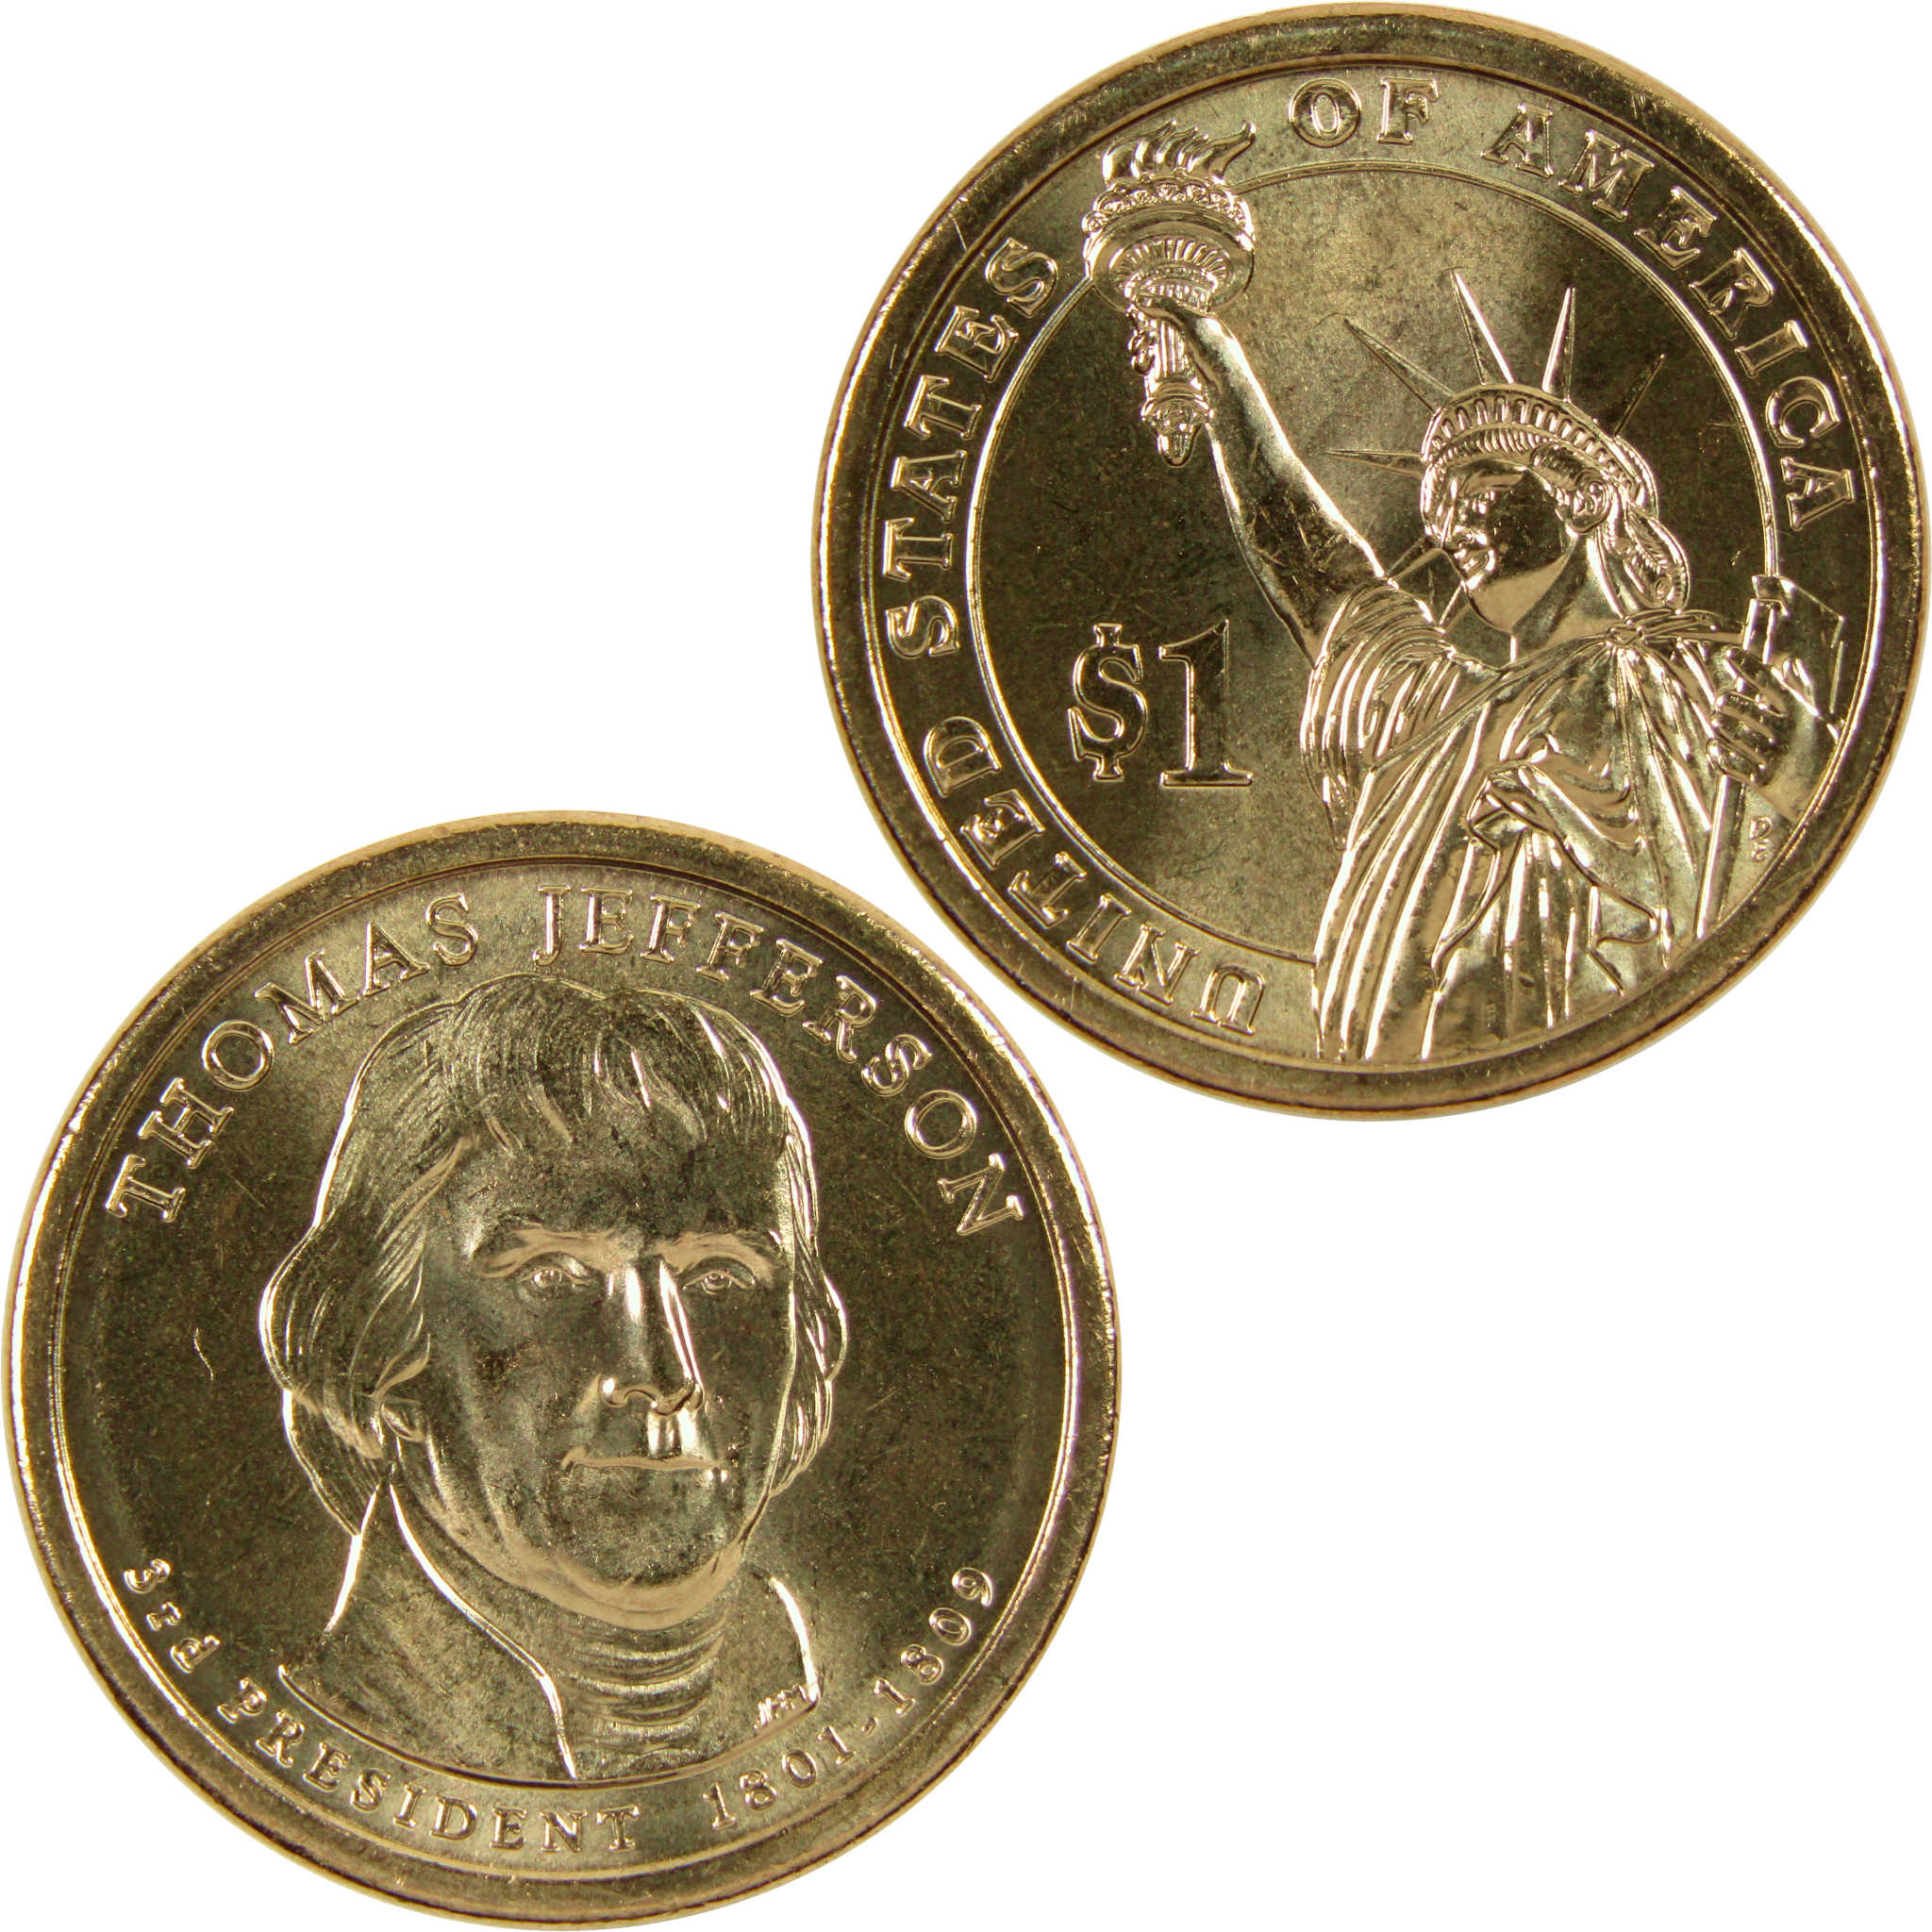 2007 D Thomas Jefferson Presidential Dollar BU Uncirculated $1 Coin